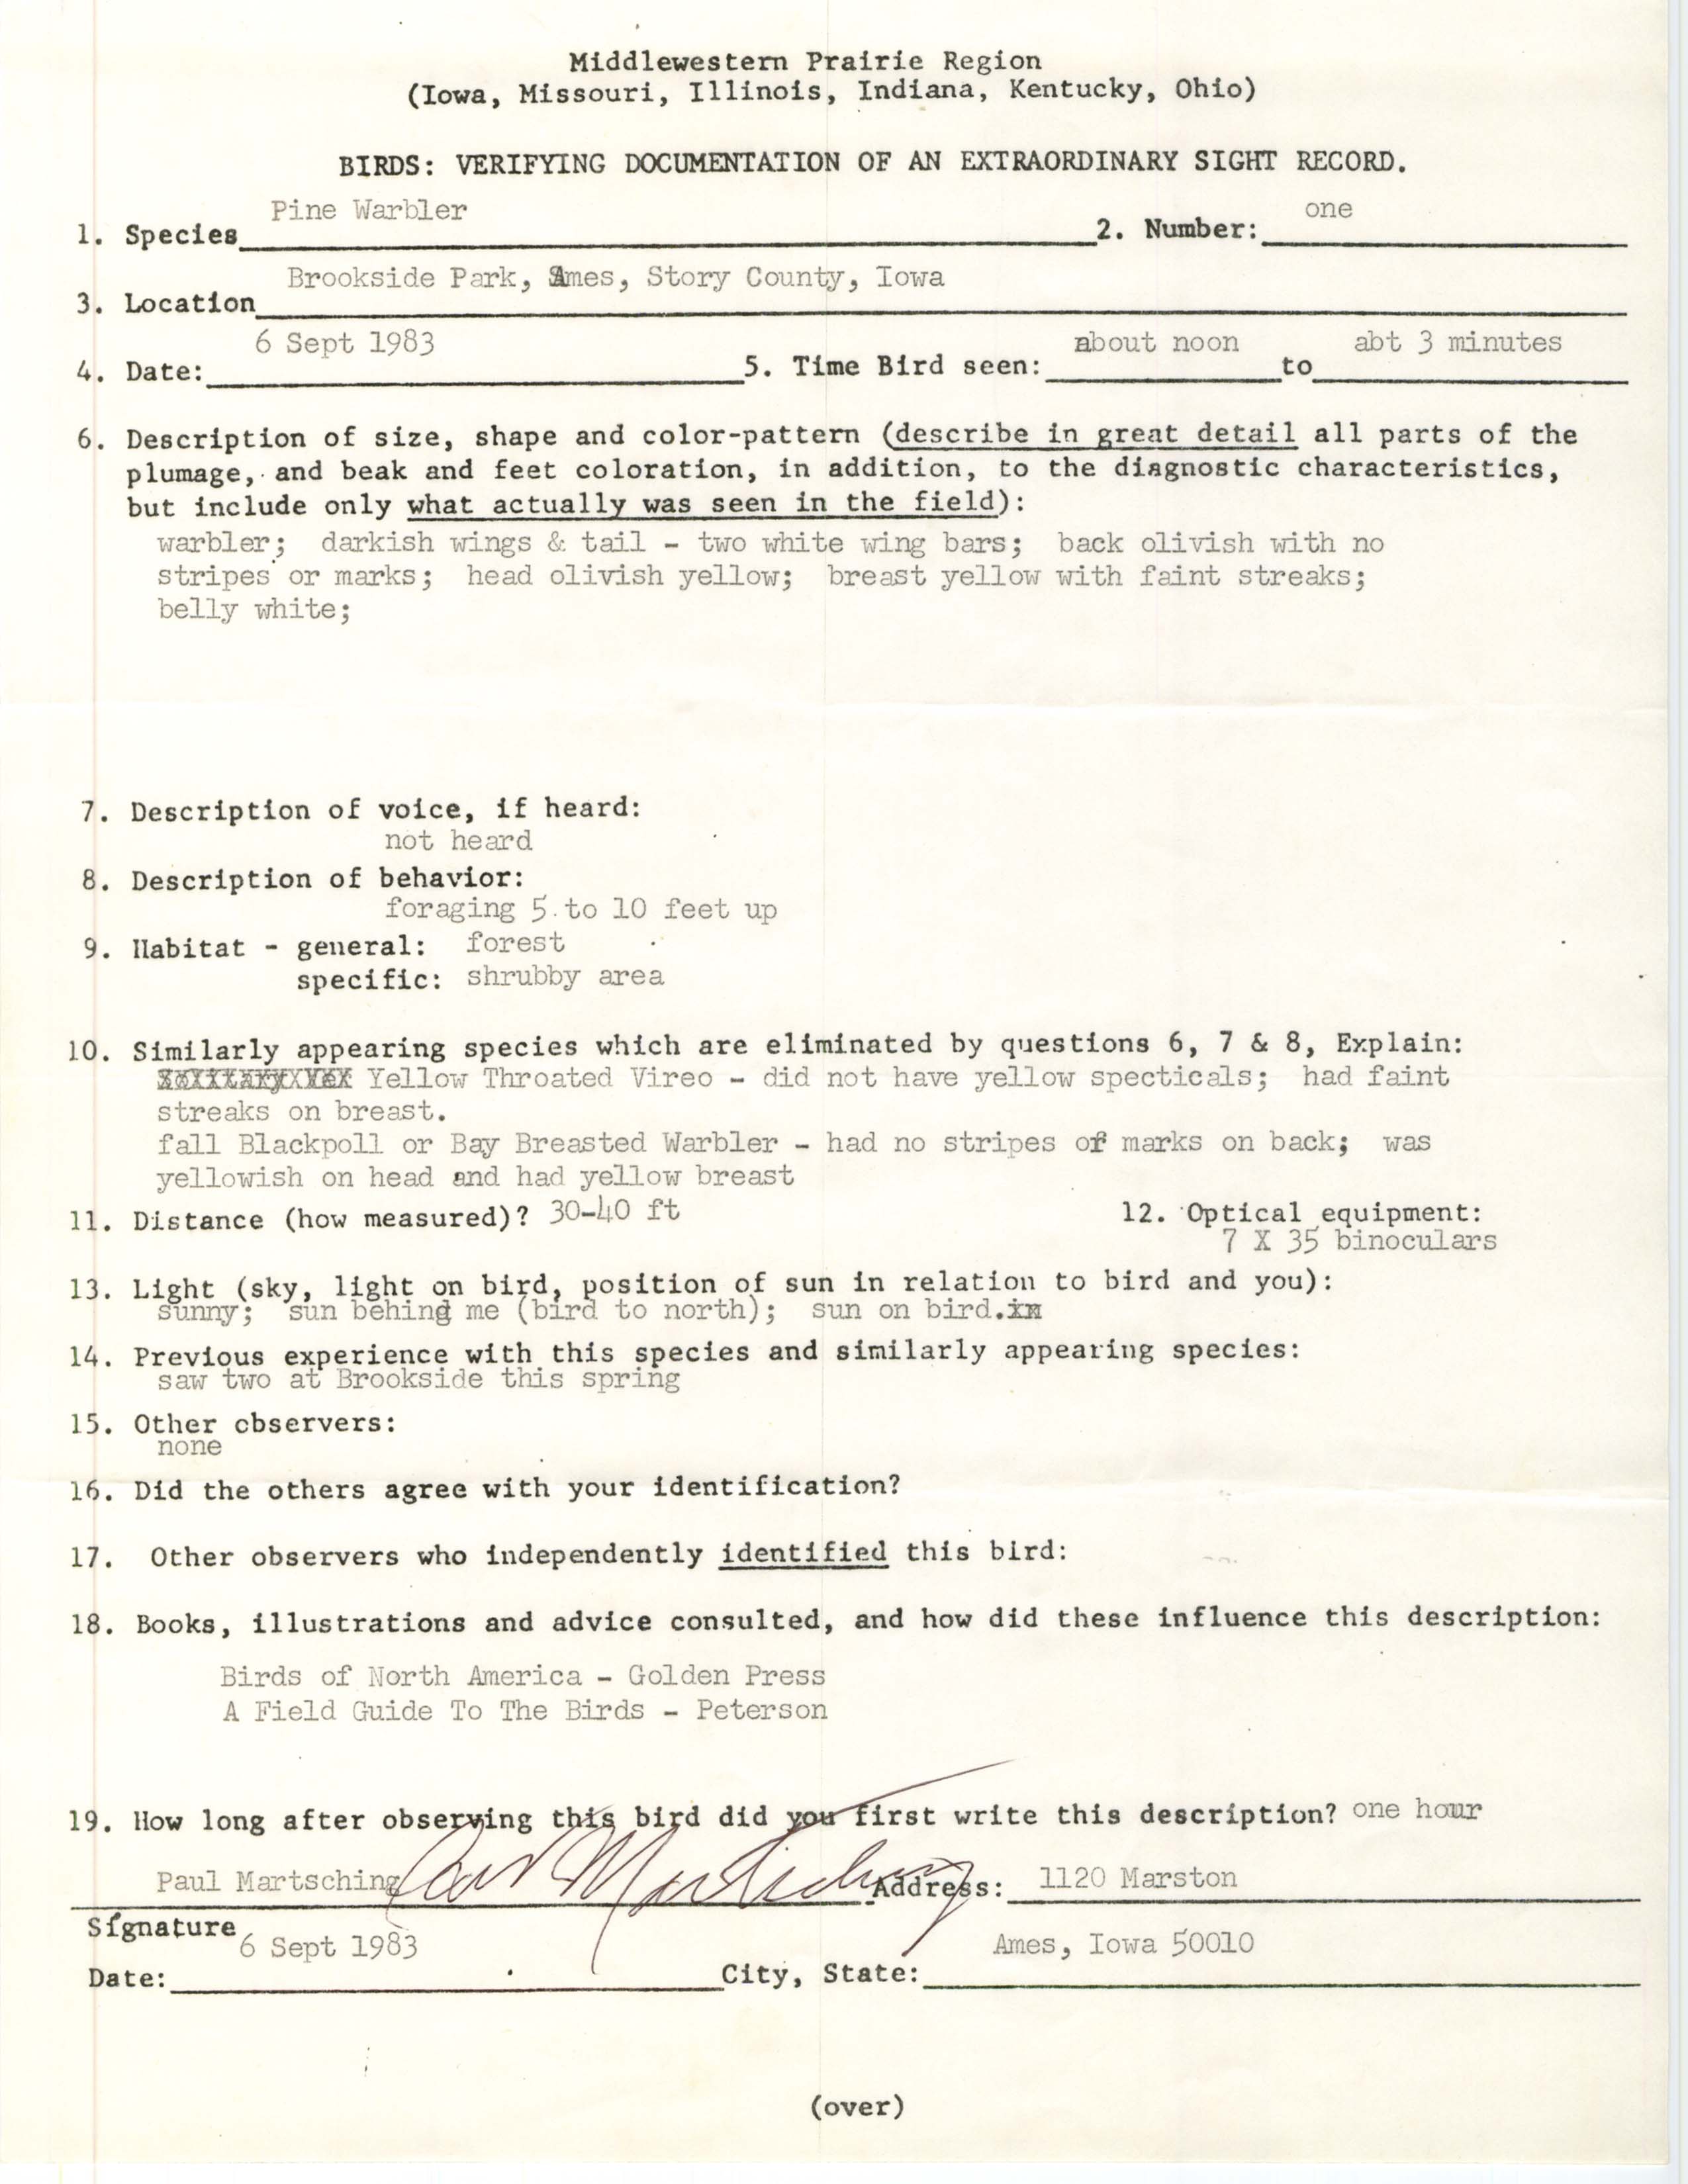 Rare bird documentation form for Pine Warbler at Brookside Park in Ames, 1983